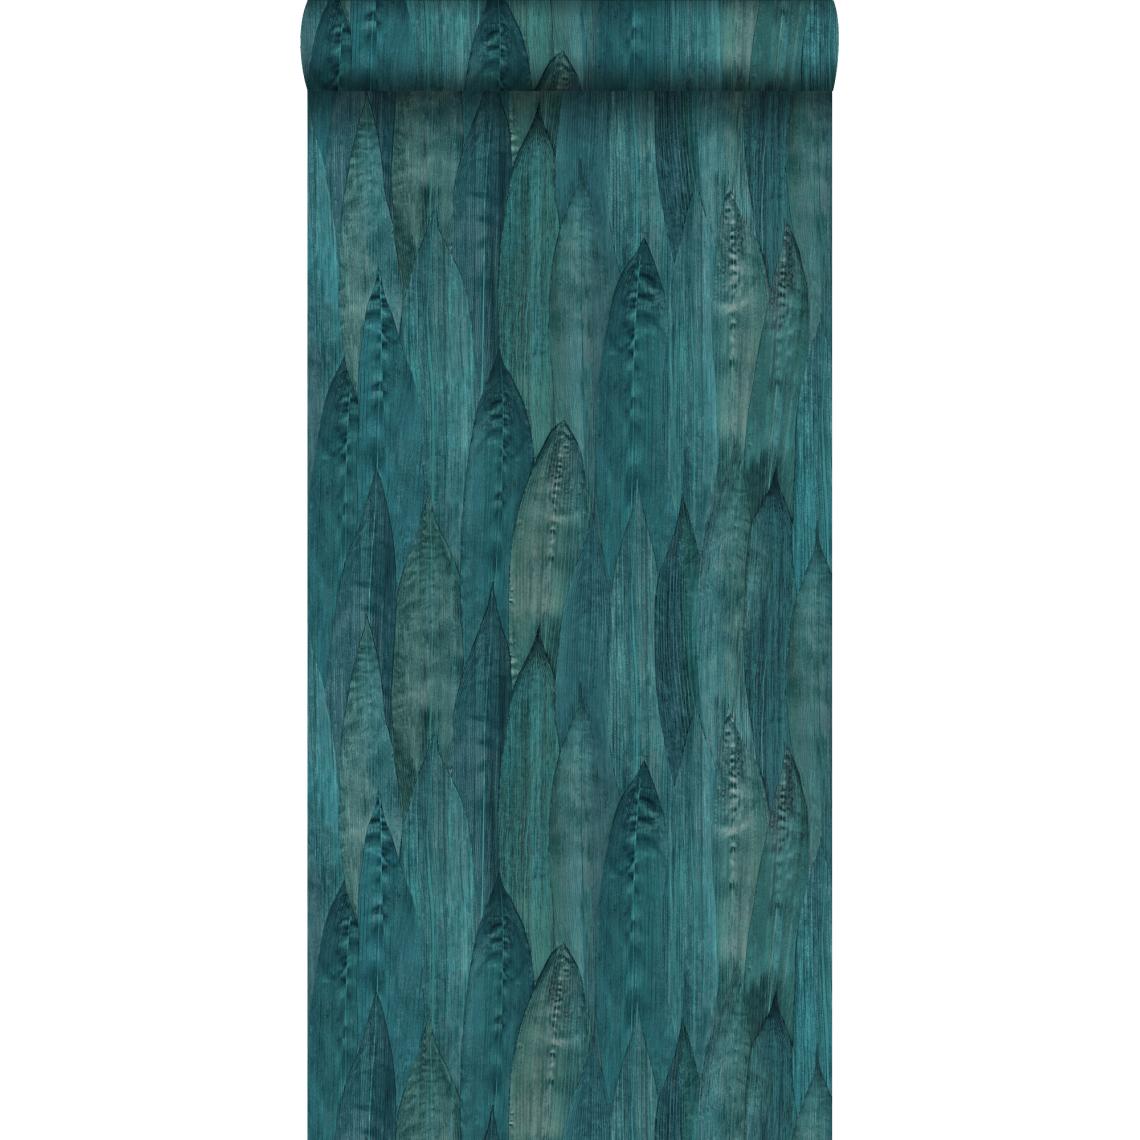 Origin - Origin PP intissé éco texture feuilles bleu canard - 347368 - 53 cm x 10,05 m - Papier peint